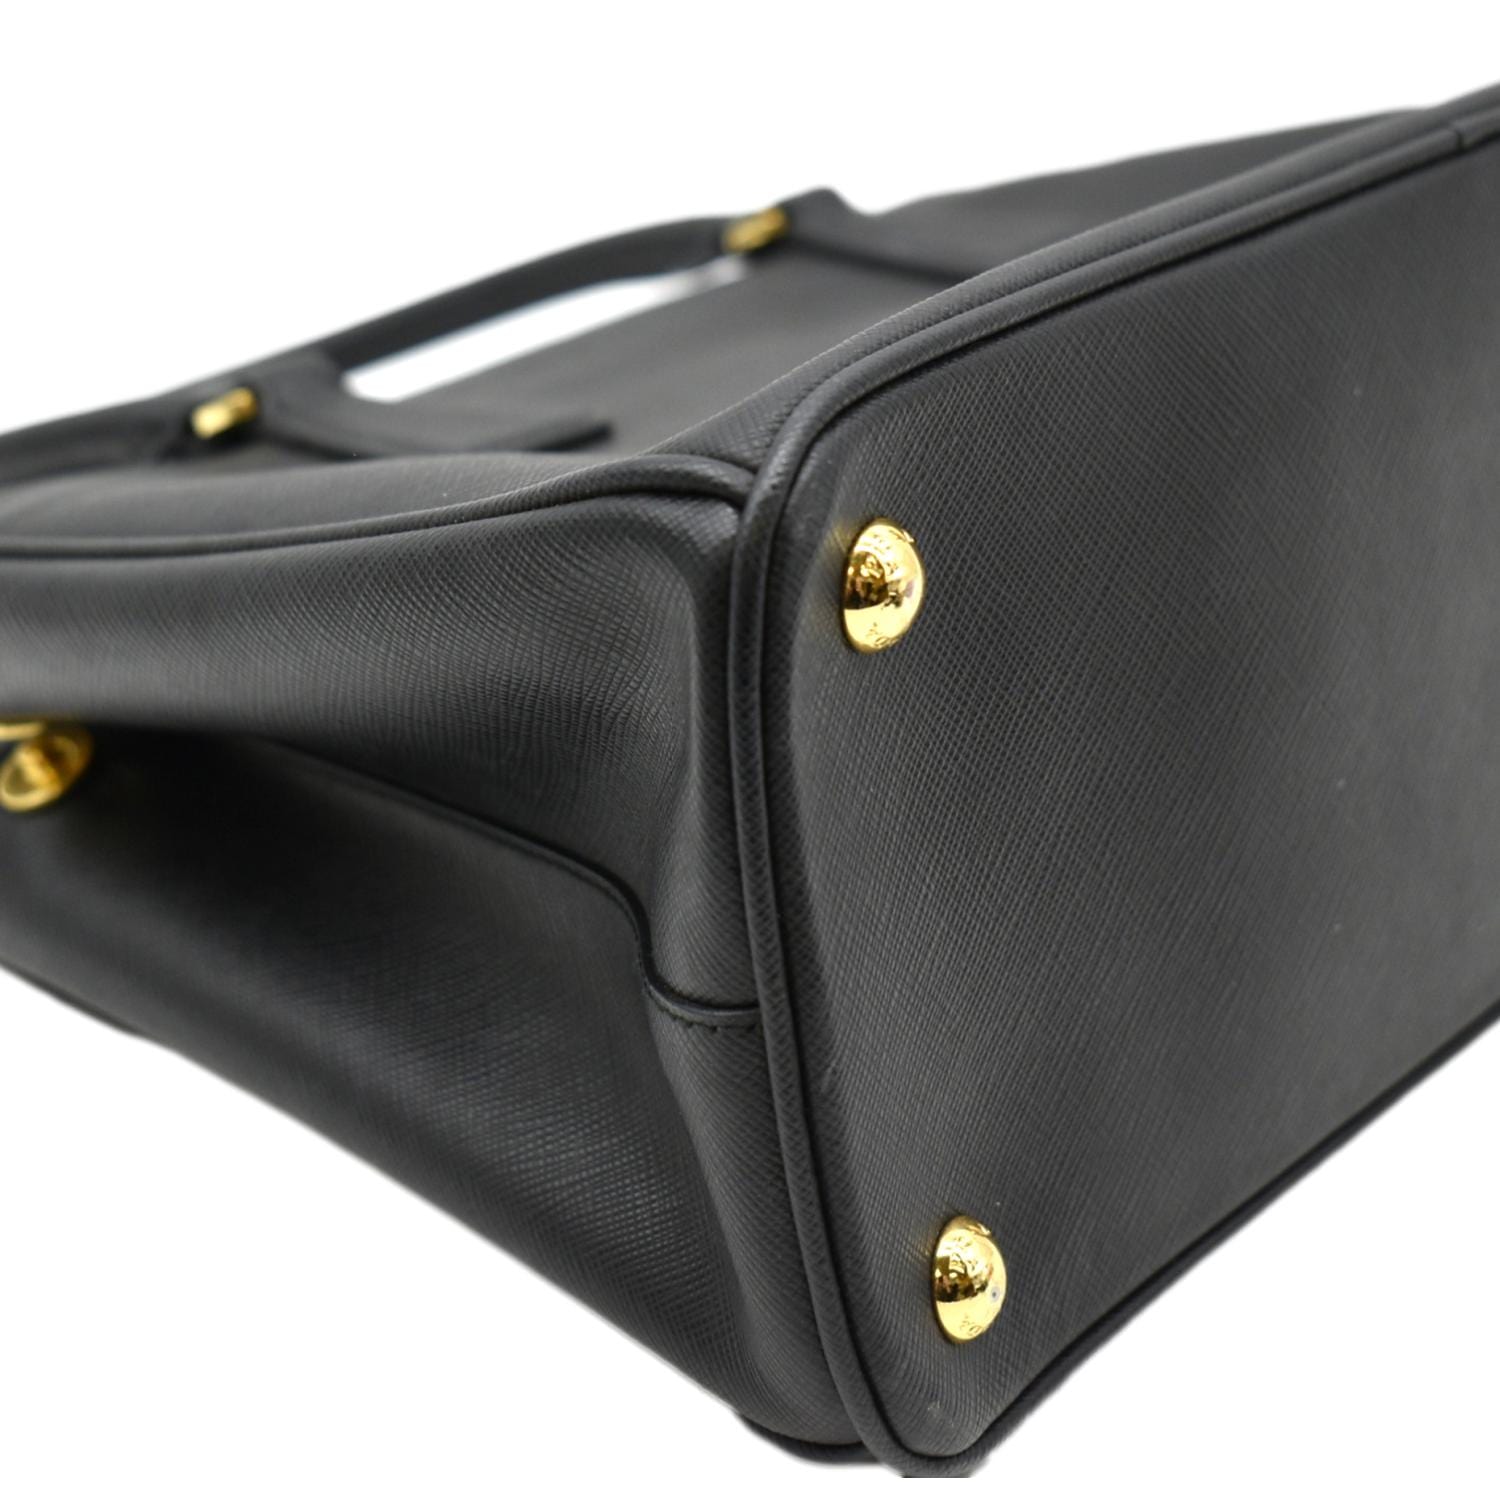 Prada Galleria Saffiano Leather Double Zip Bag, Small, Gray, Authentic $3900